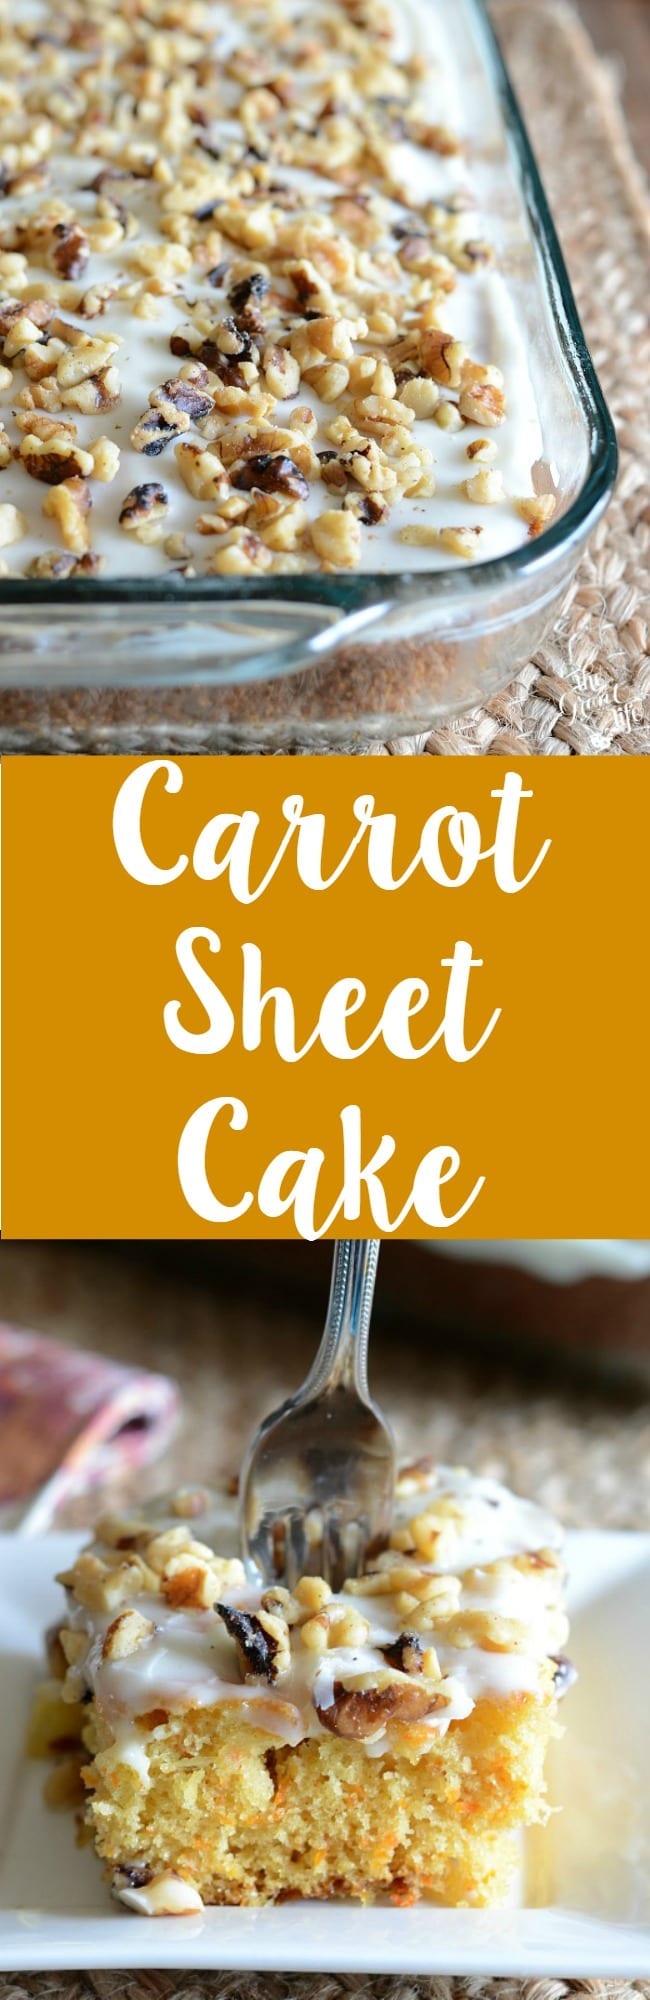 Carrot sheet cake recipe